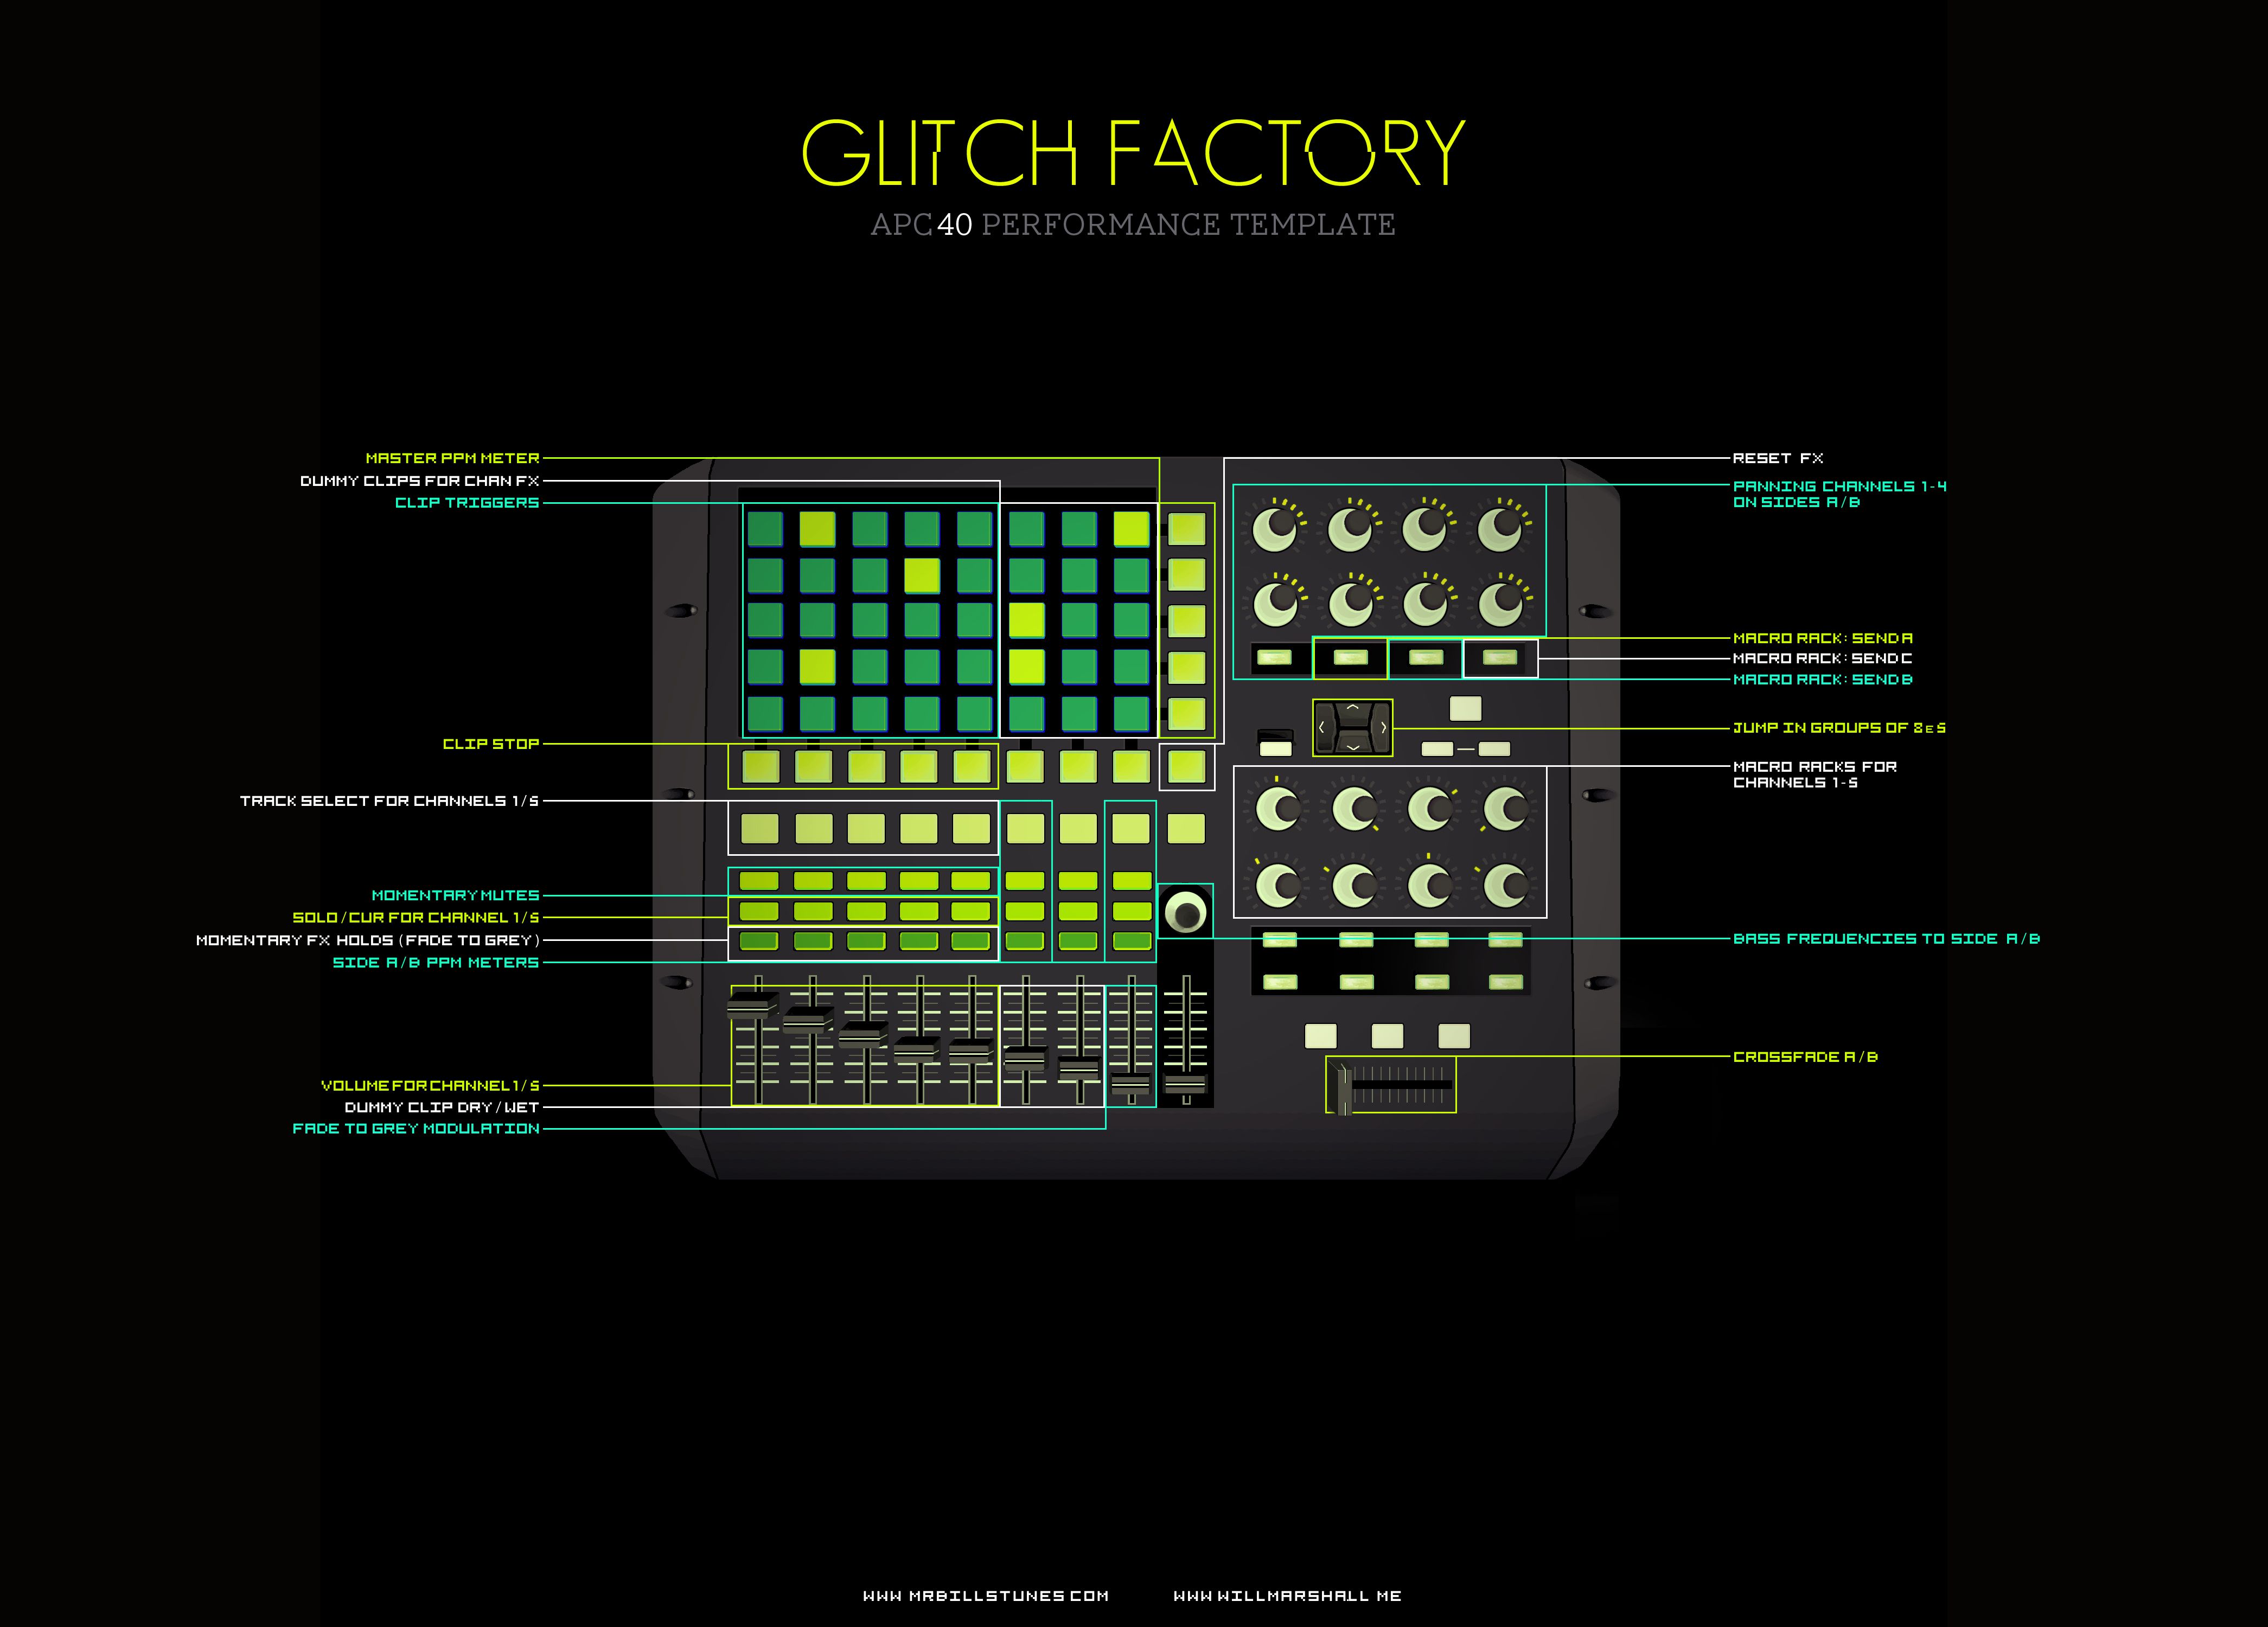 Glitch Factory remaps your APC40 into a lean mean live performance machine.